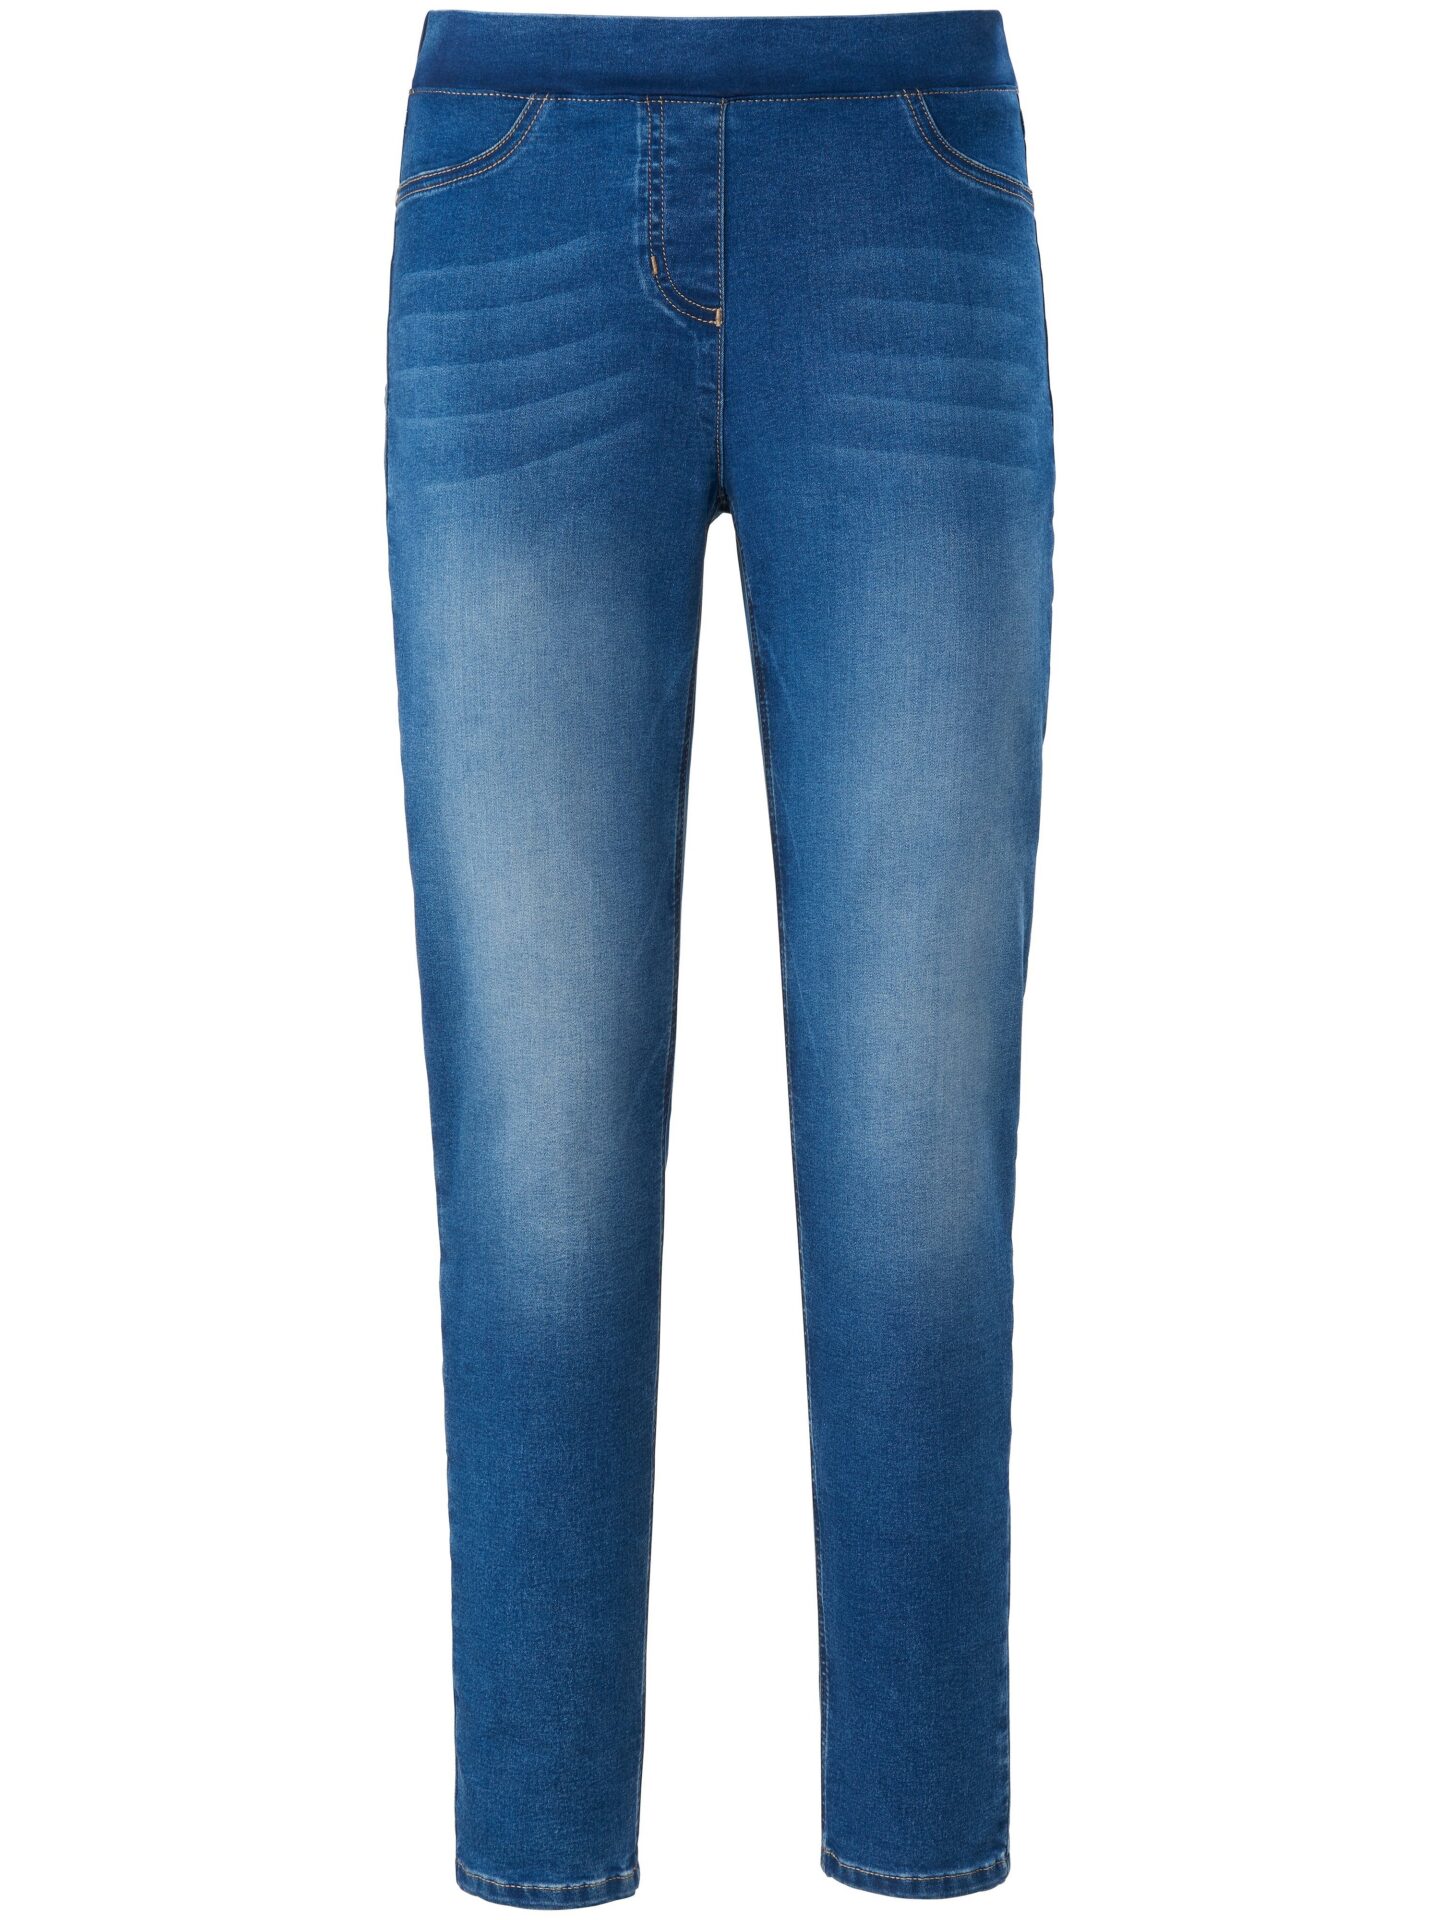 Enkellange jeans pasvorm Sylvia Van Peter Hahn denim